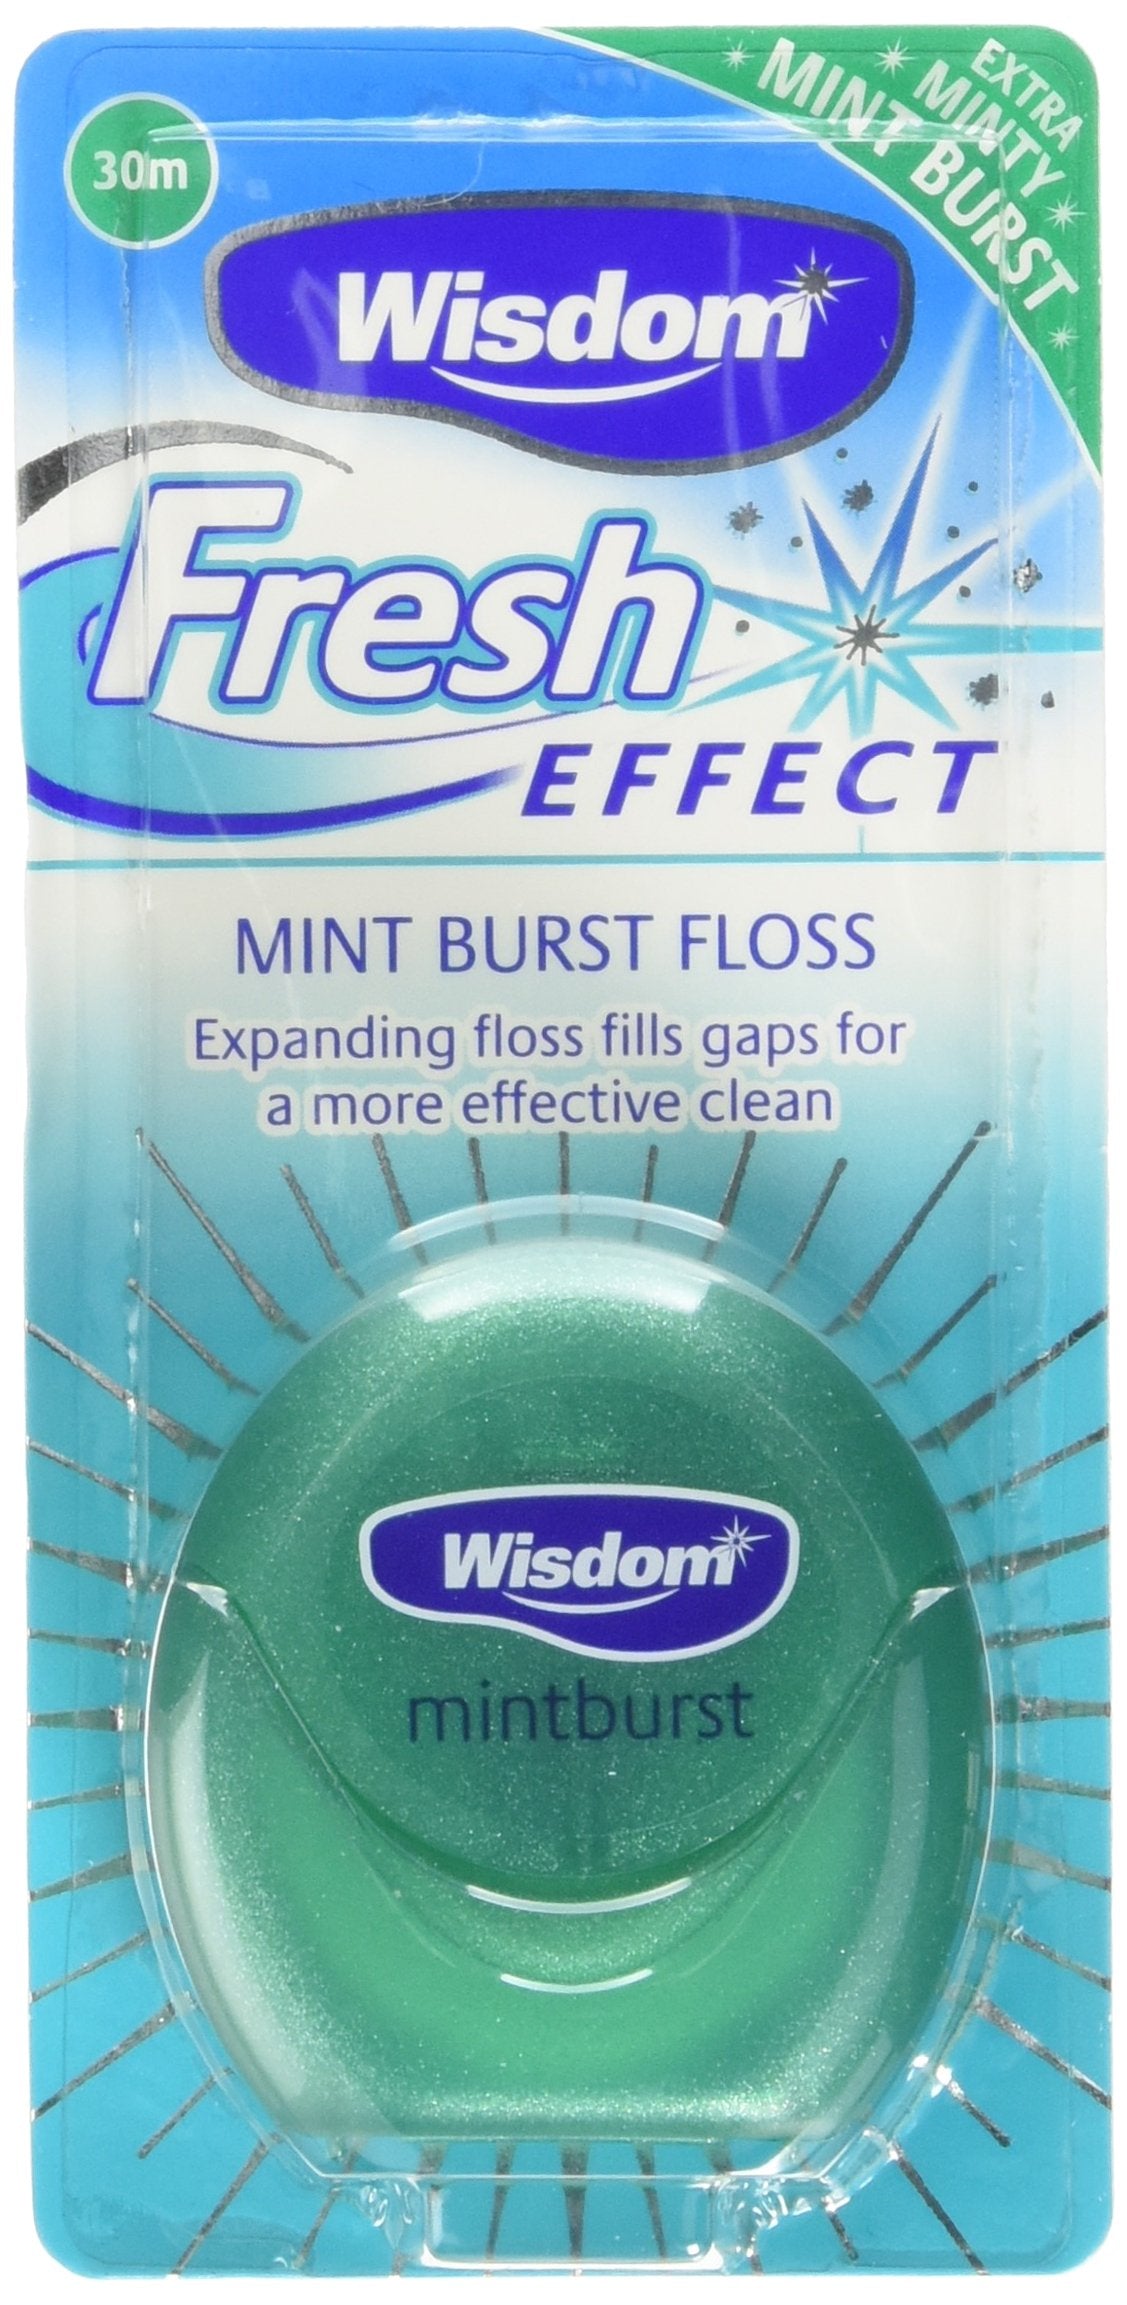 Wisdom Fresh Effect Mint Burst Floss, Pack of 6